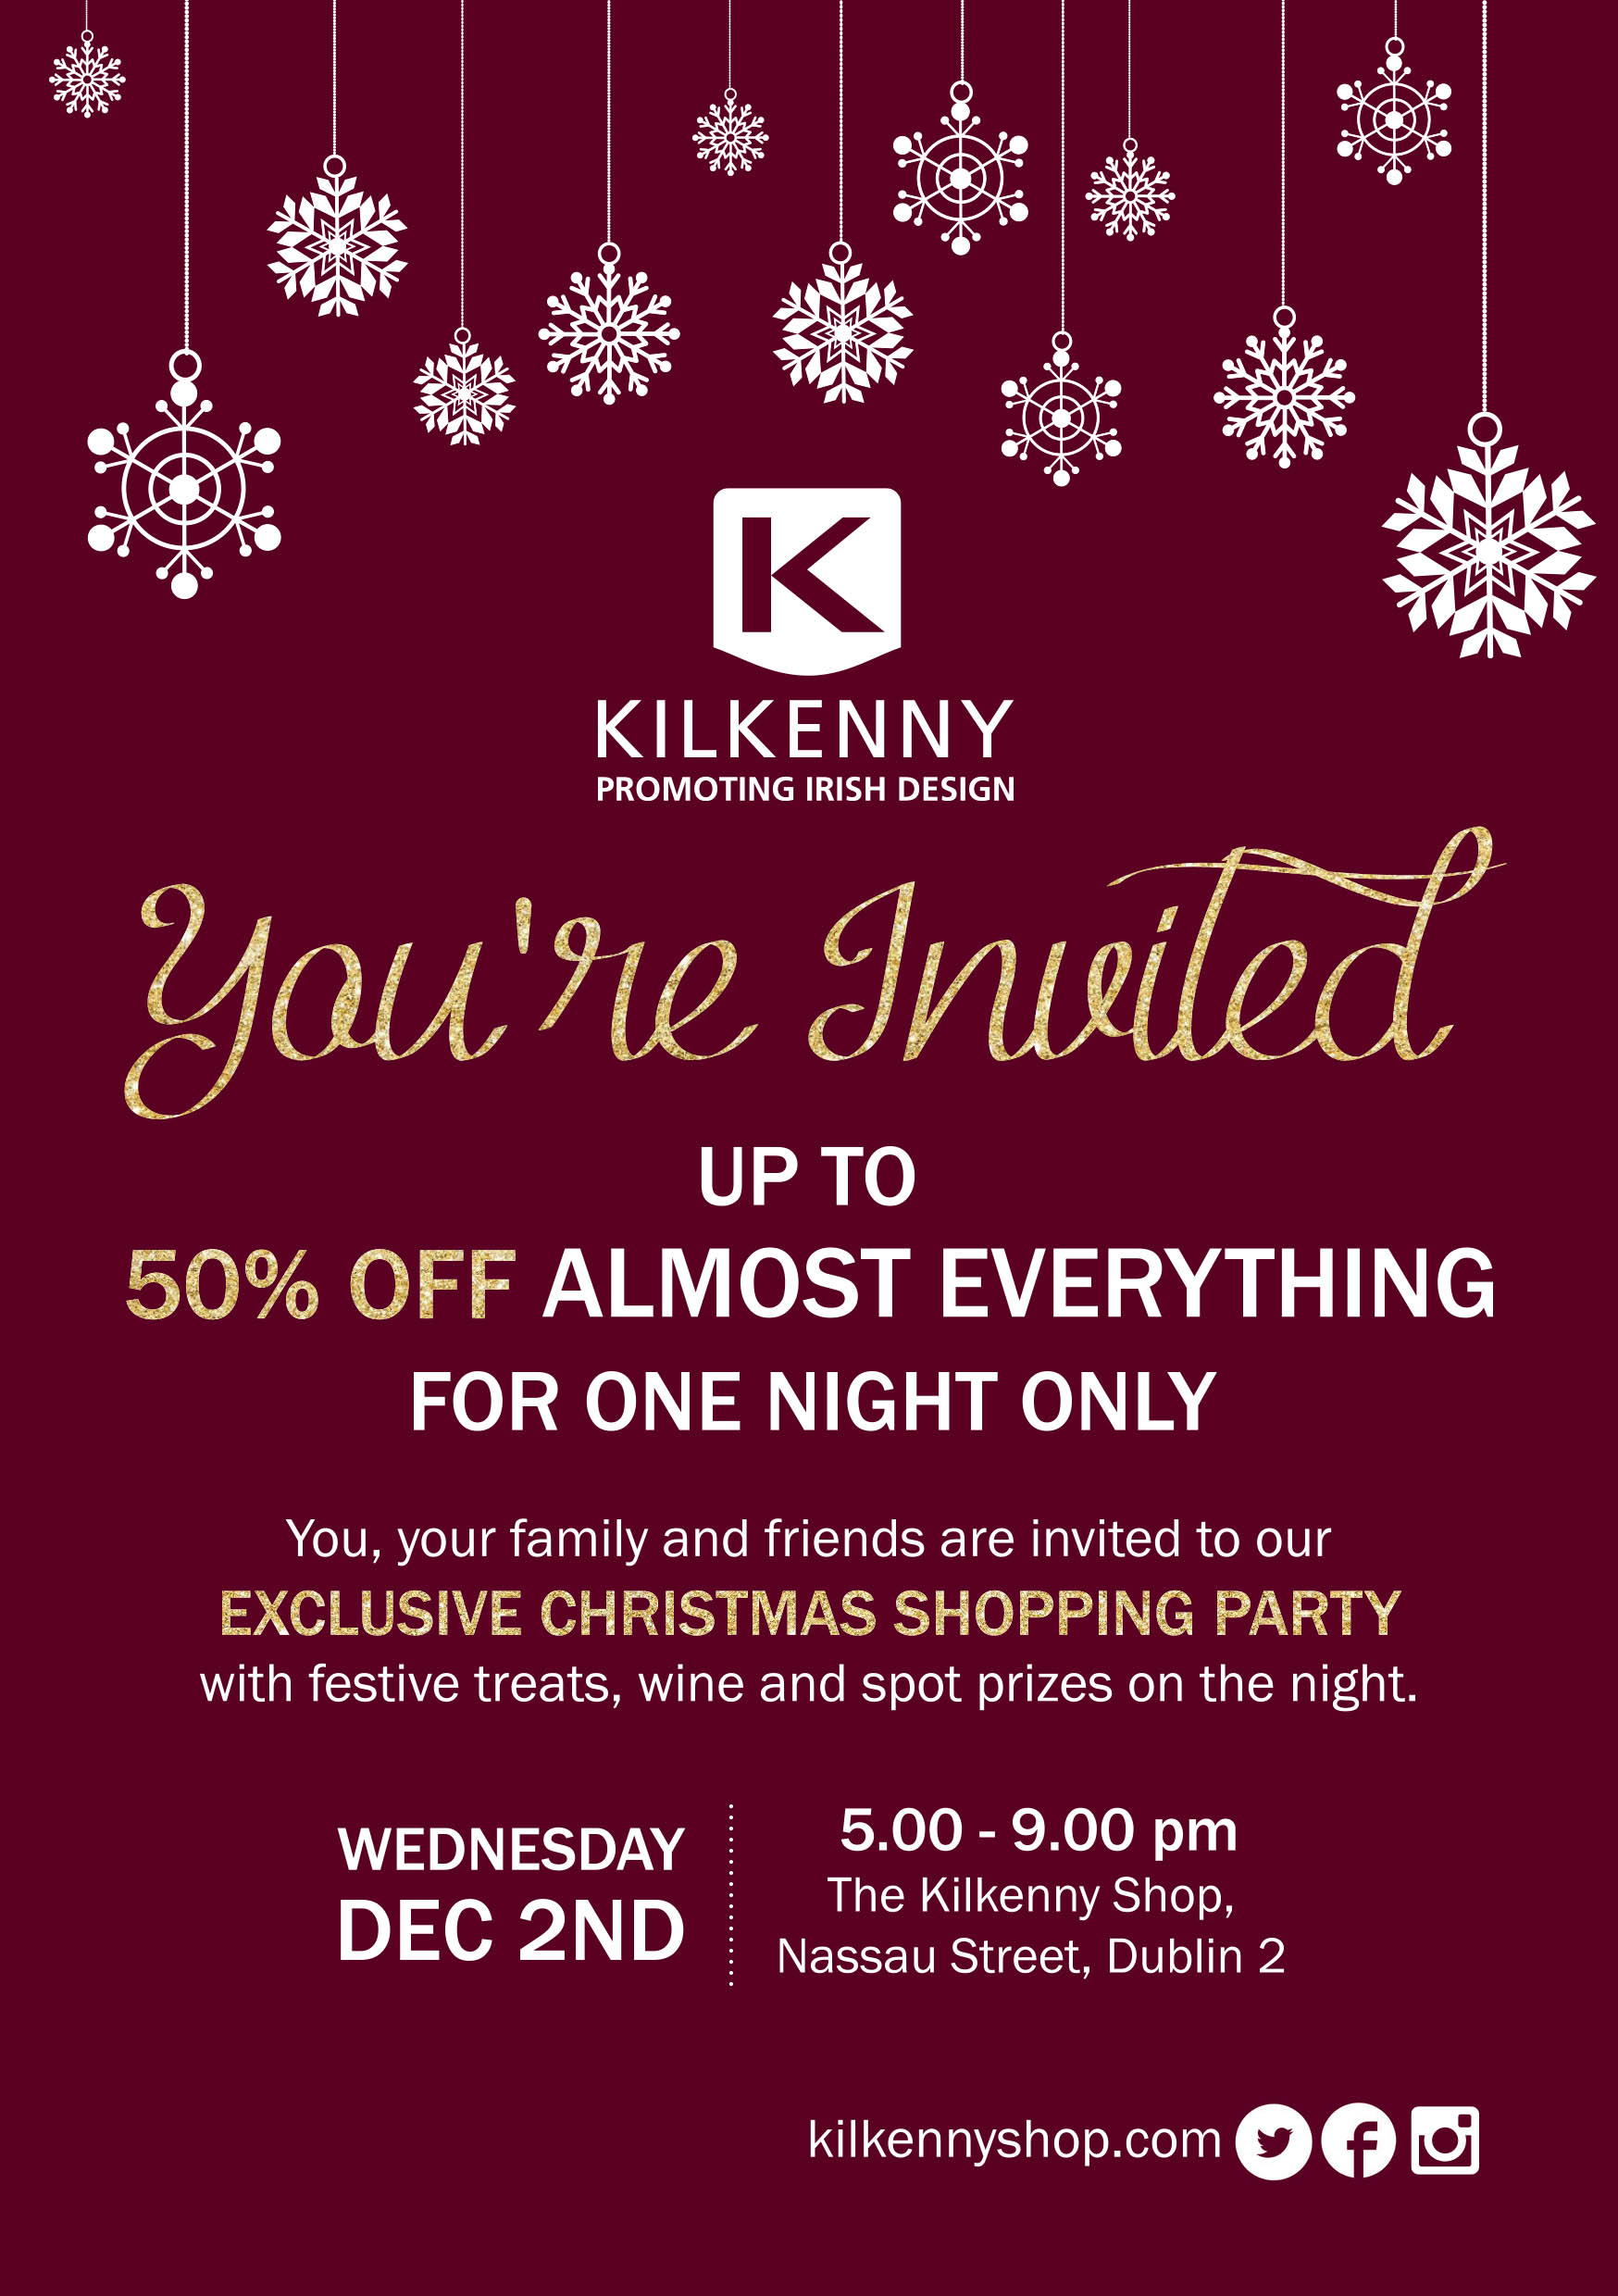 Kilkenny design exclusive 50% off evening